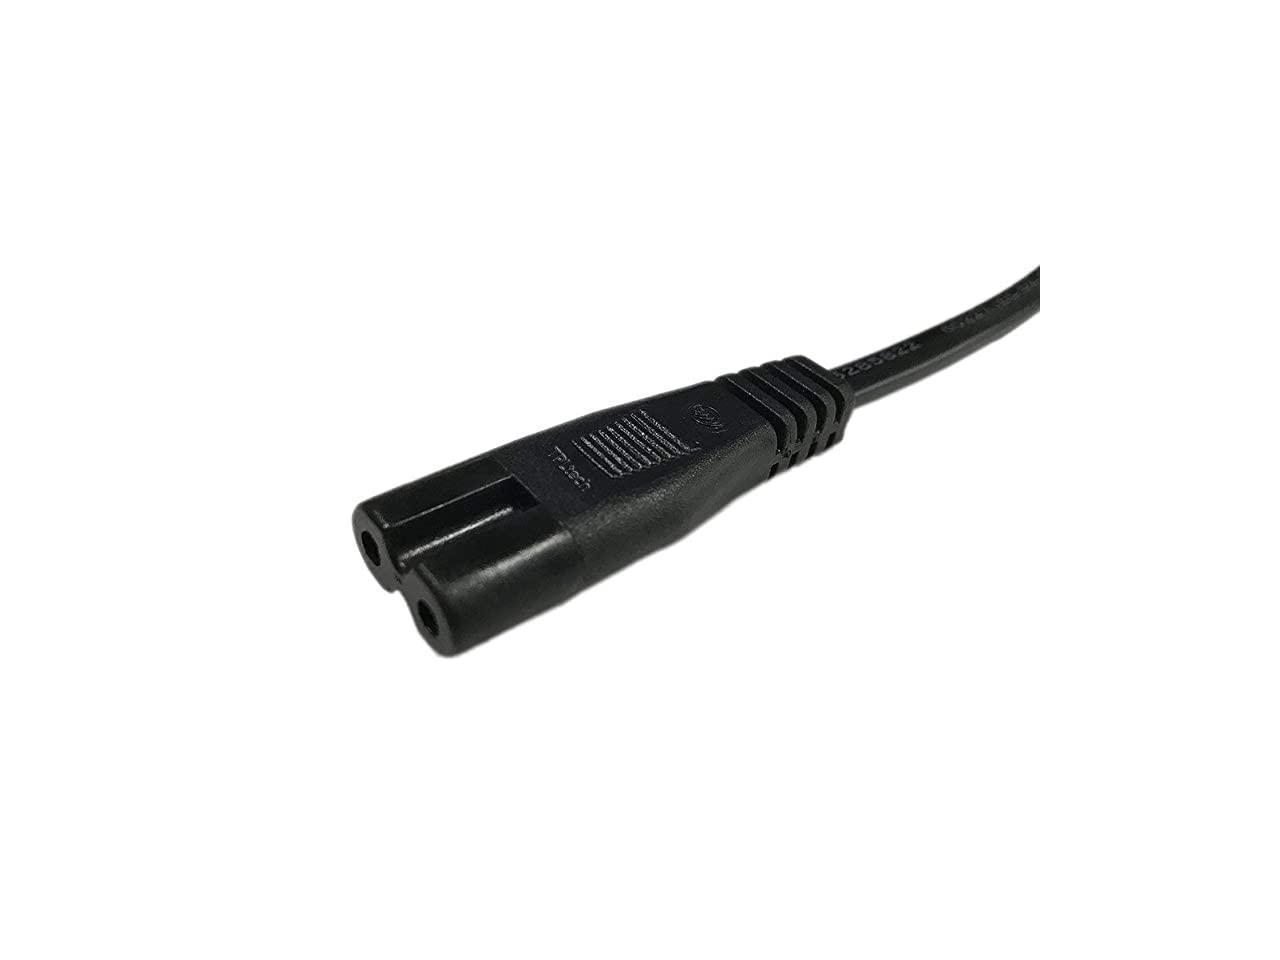 SLLEA 3.3ft USB Cable for EPSON XP-400 XP-410 WF-2530 WF-2540 WF-3520 WF-3540 Printer 